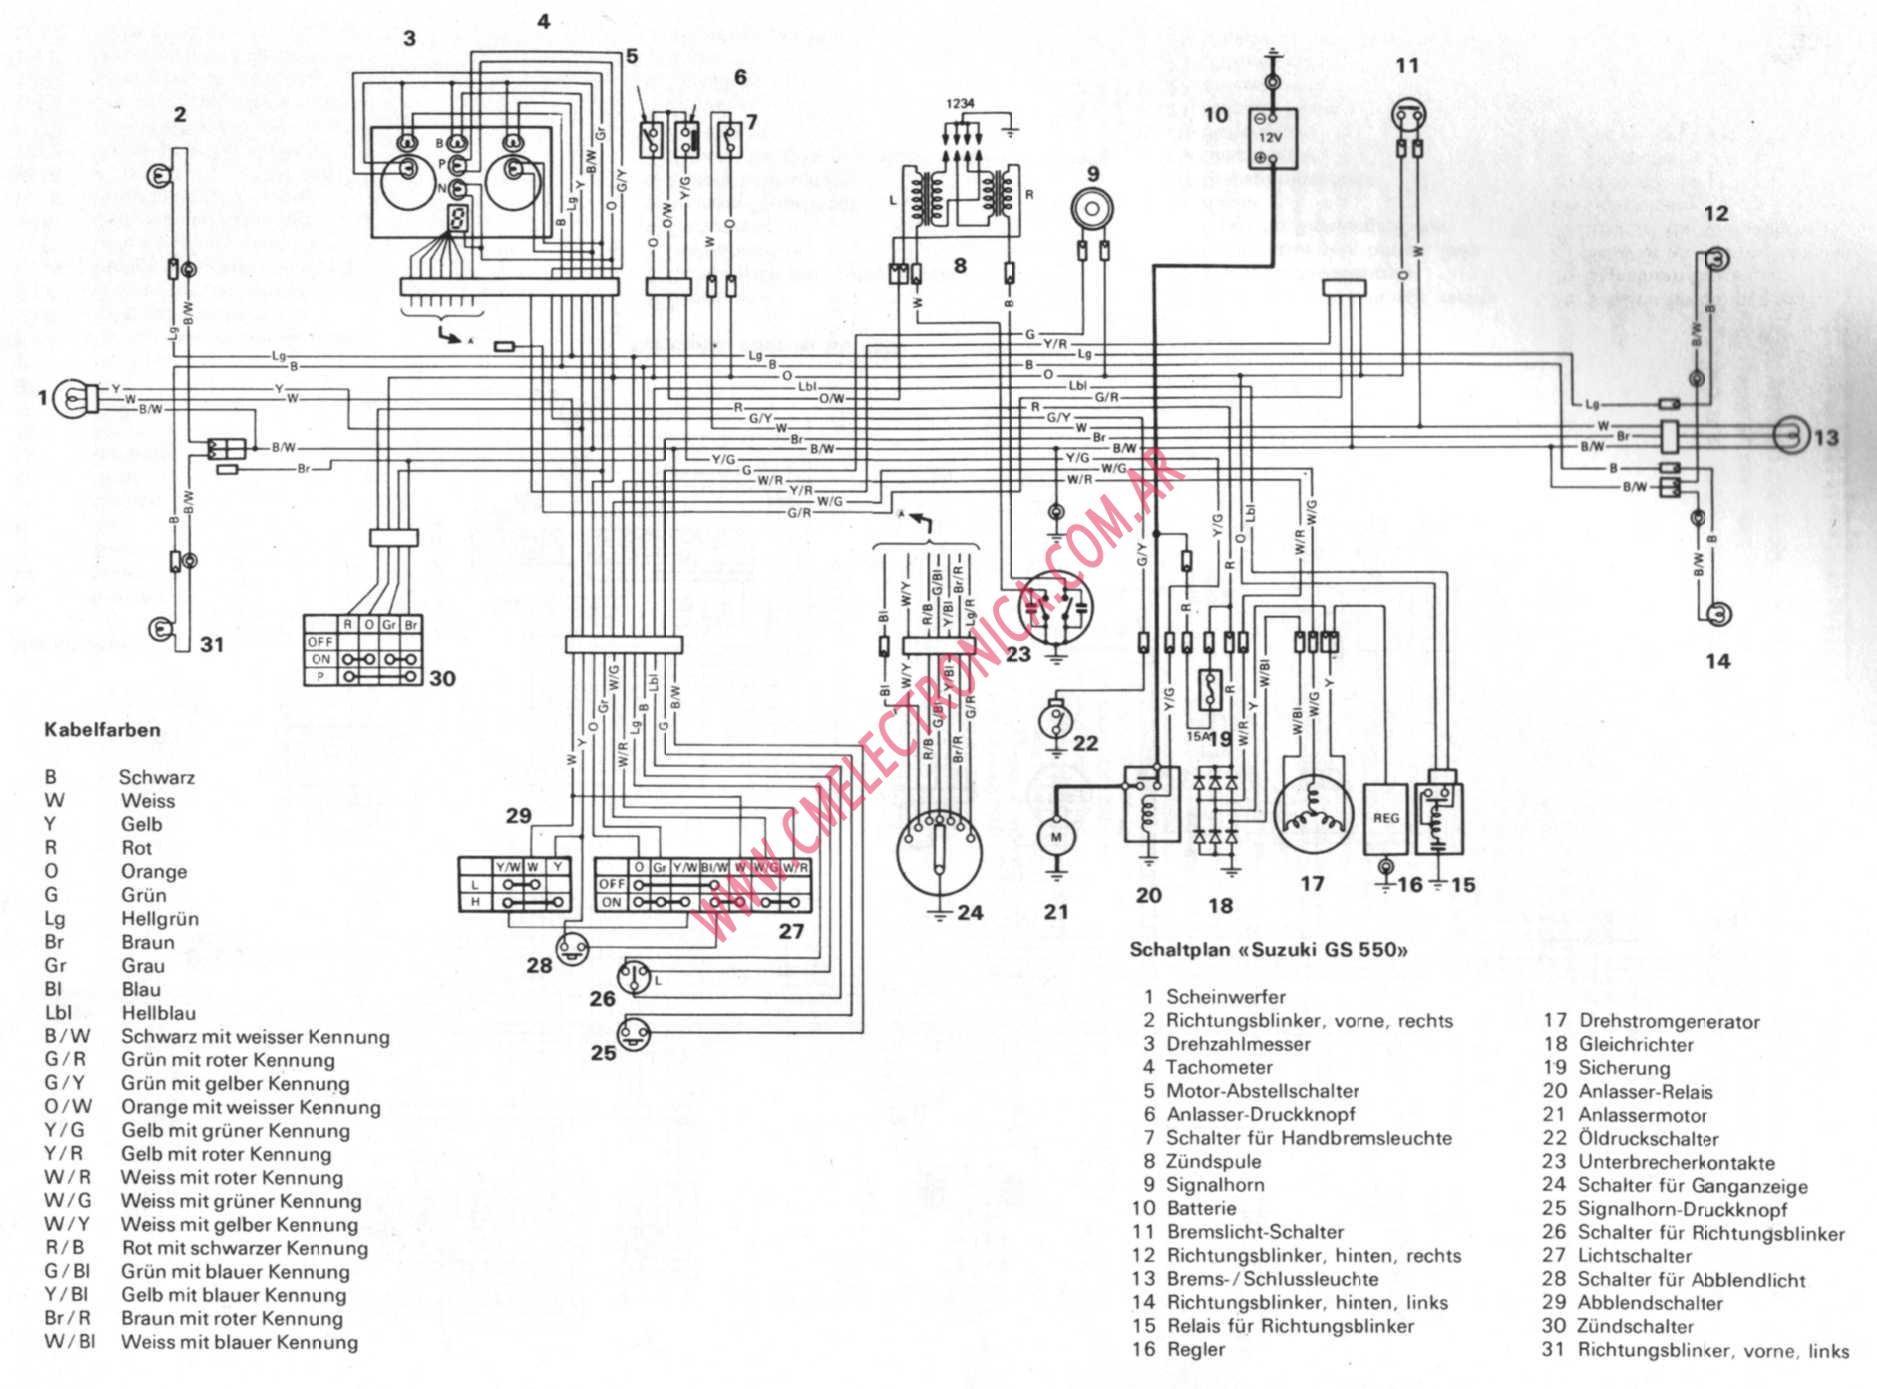 2005 Suzuki Gsxr 750 Wiring Diagram from www.cmelectronica.com.ar